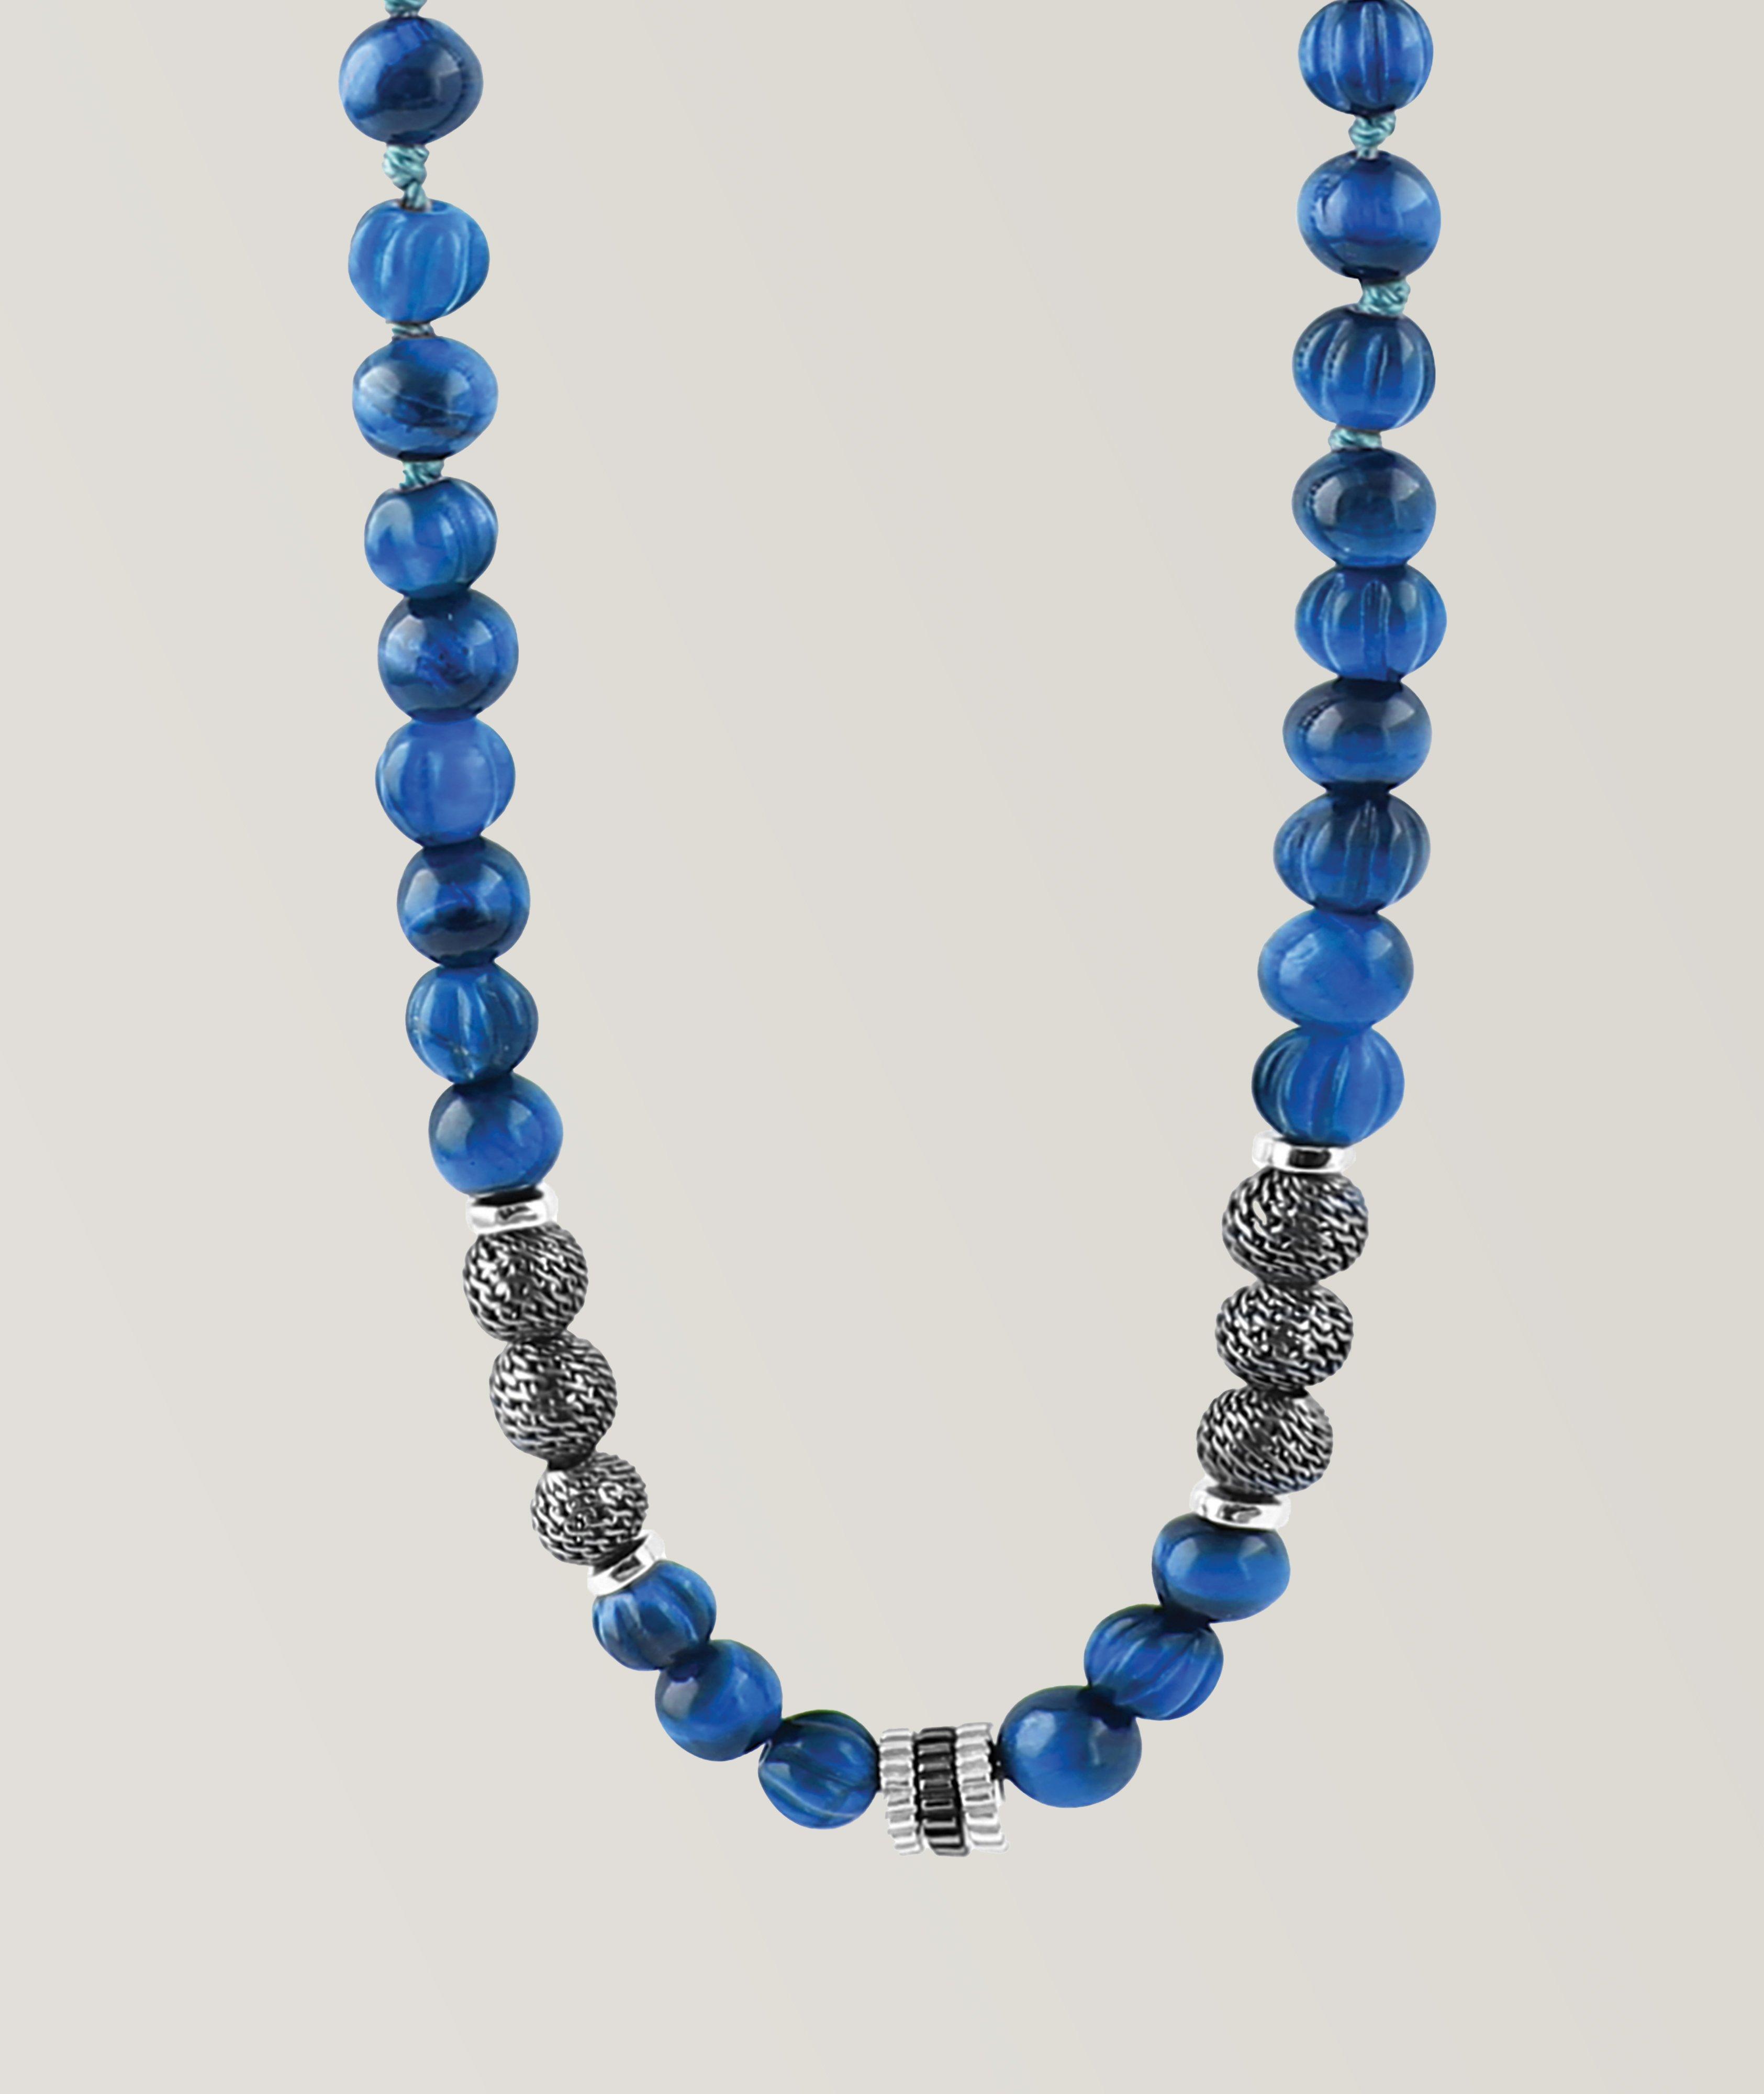 Collier de billes de sodalite bleue, collection Formentera image 0